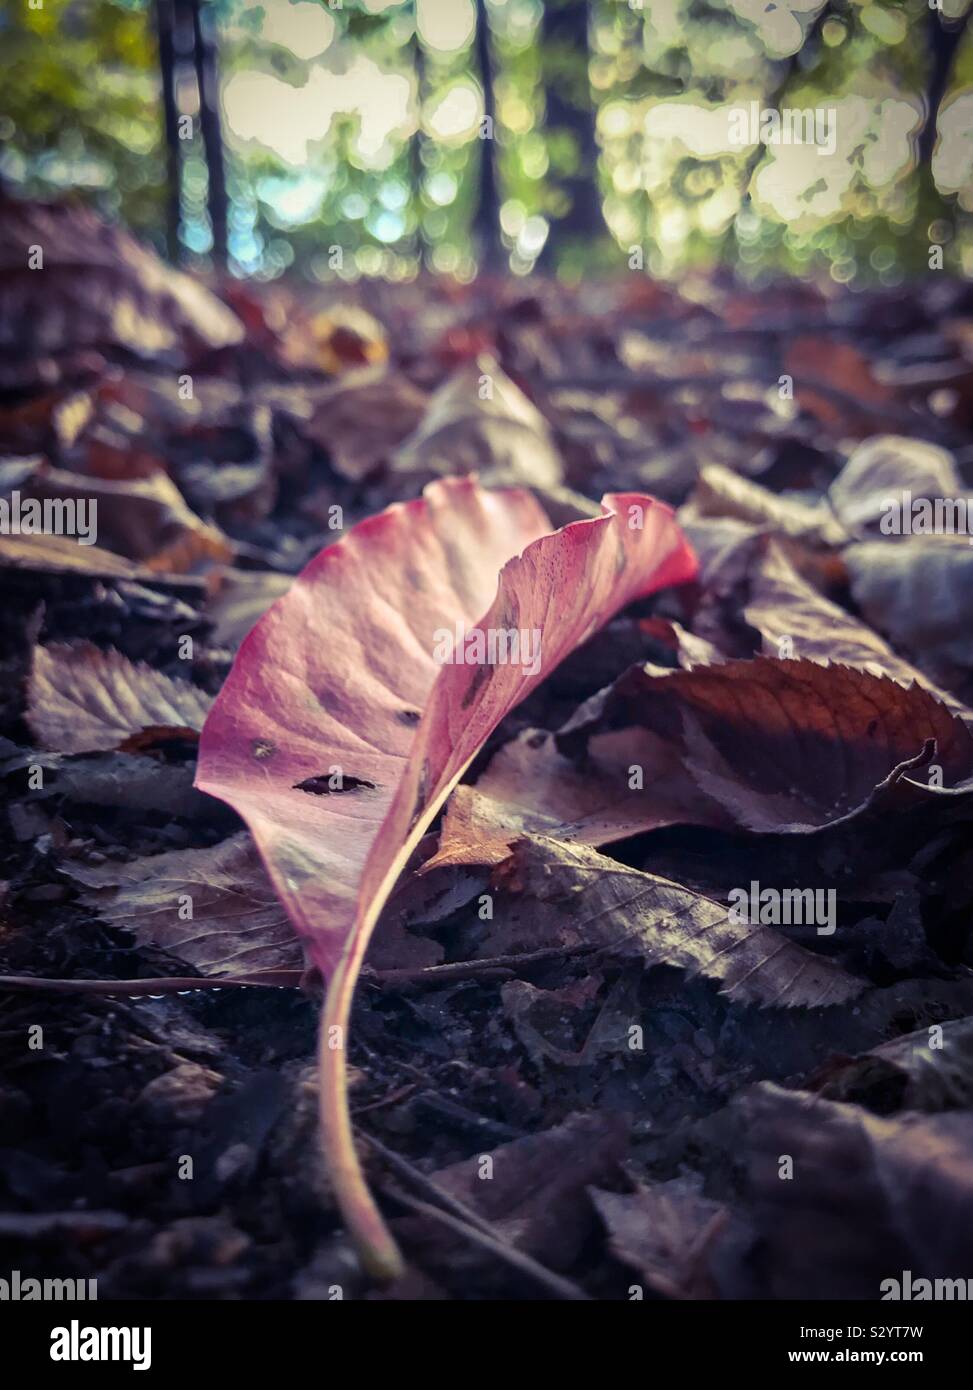 Dead leaf fallen to forest floor in autumn Stock Photo